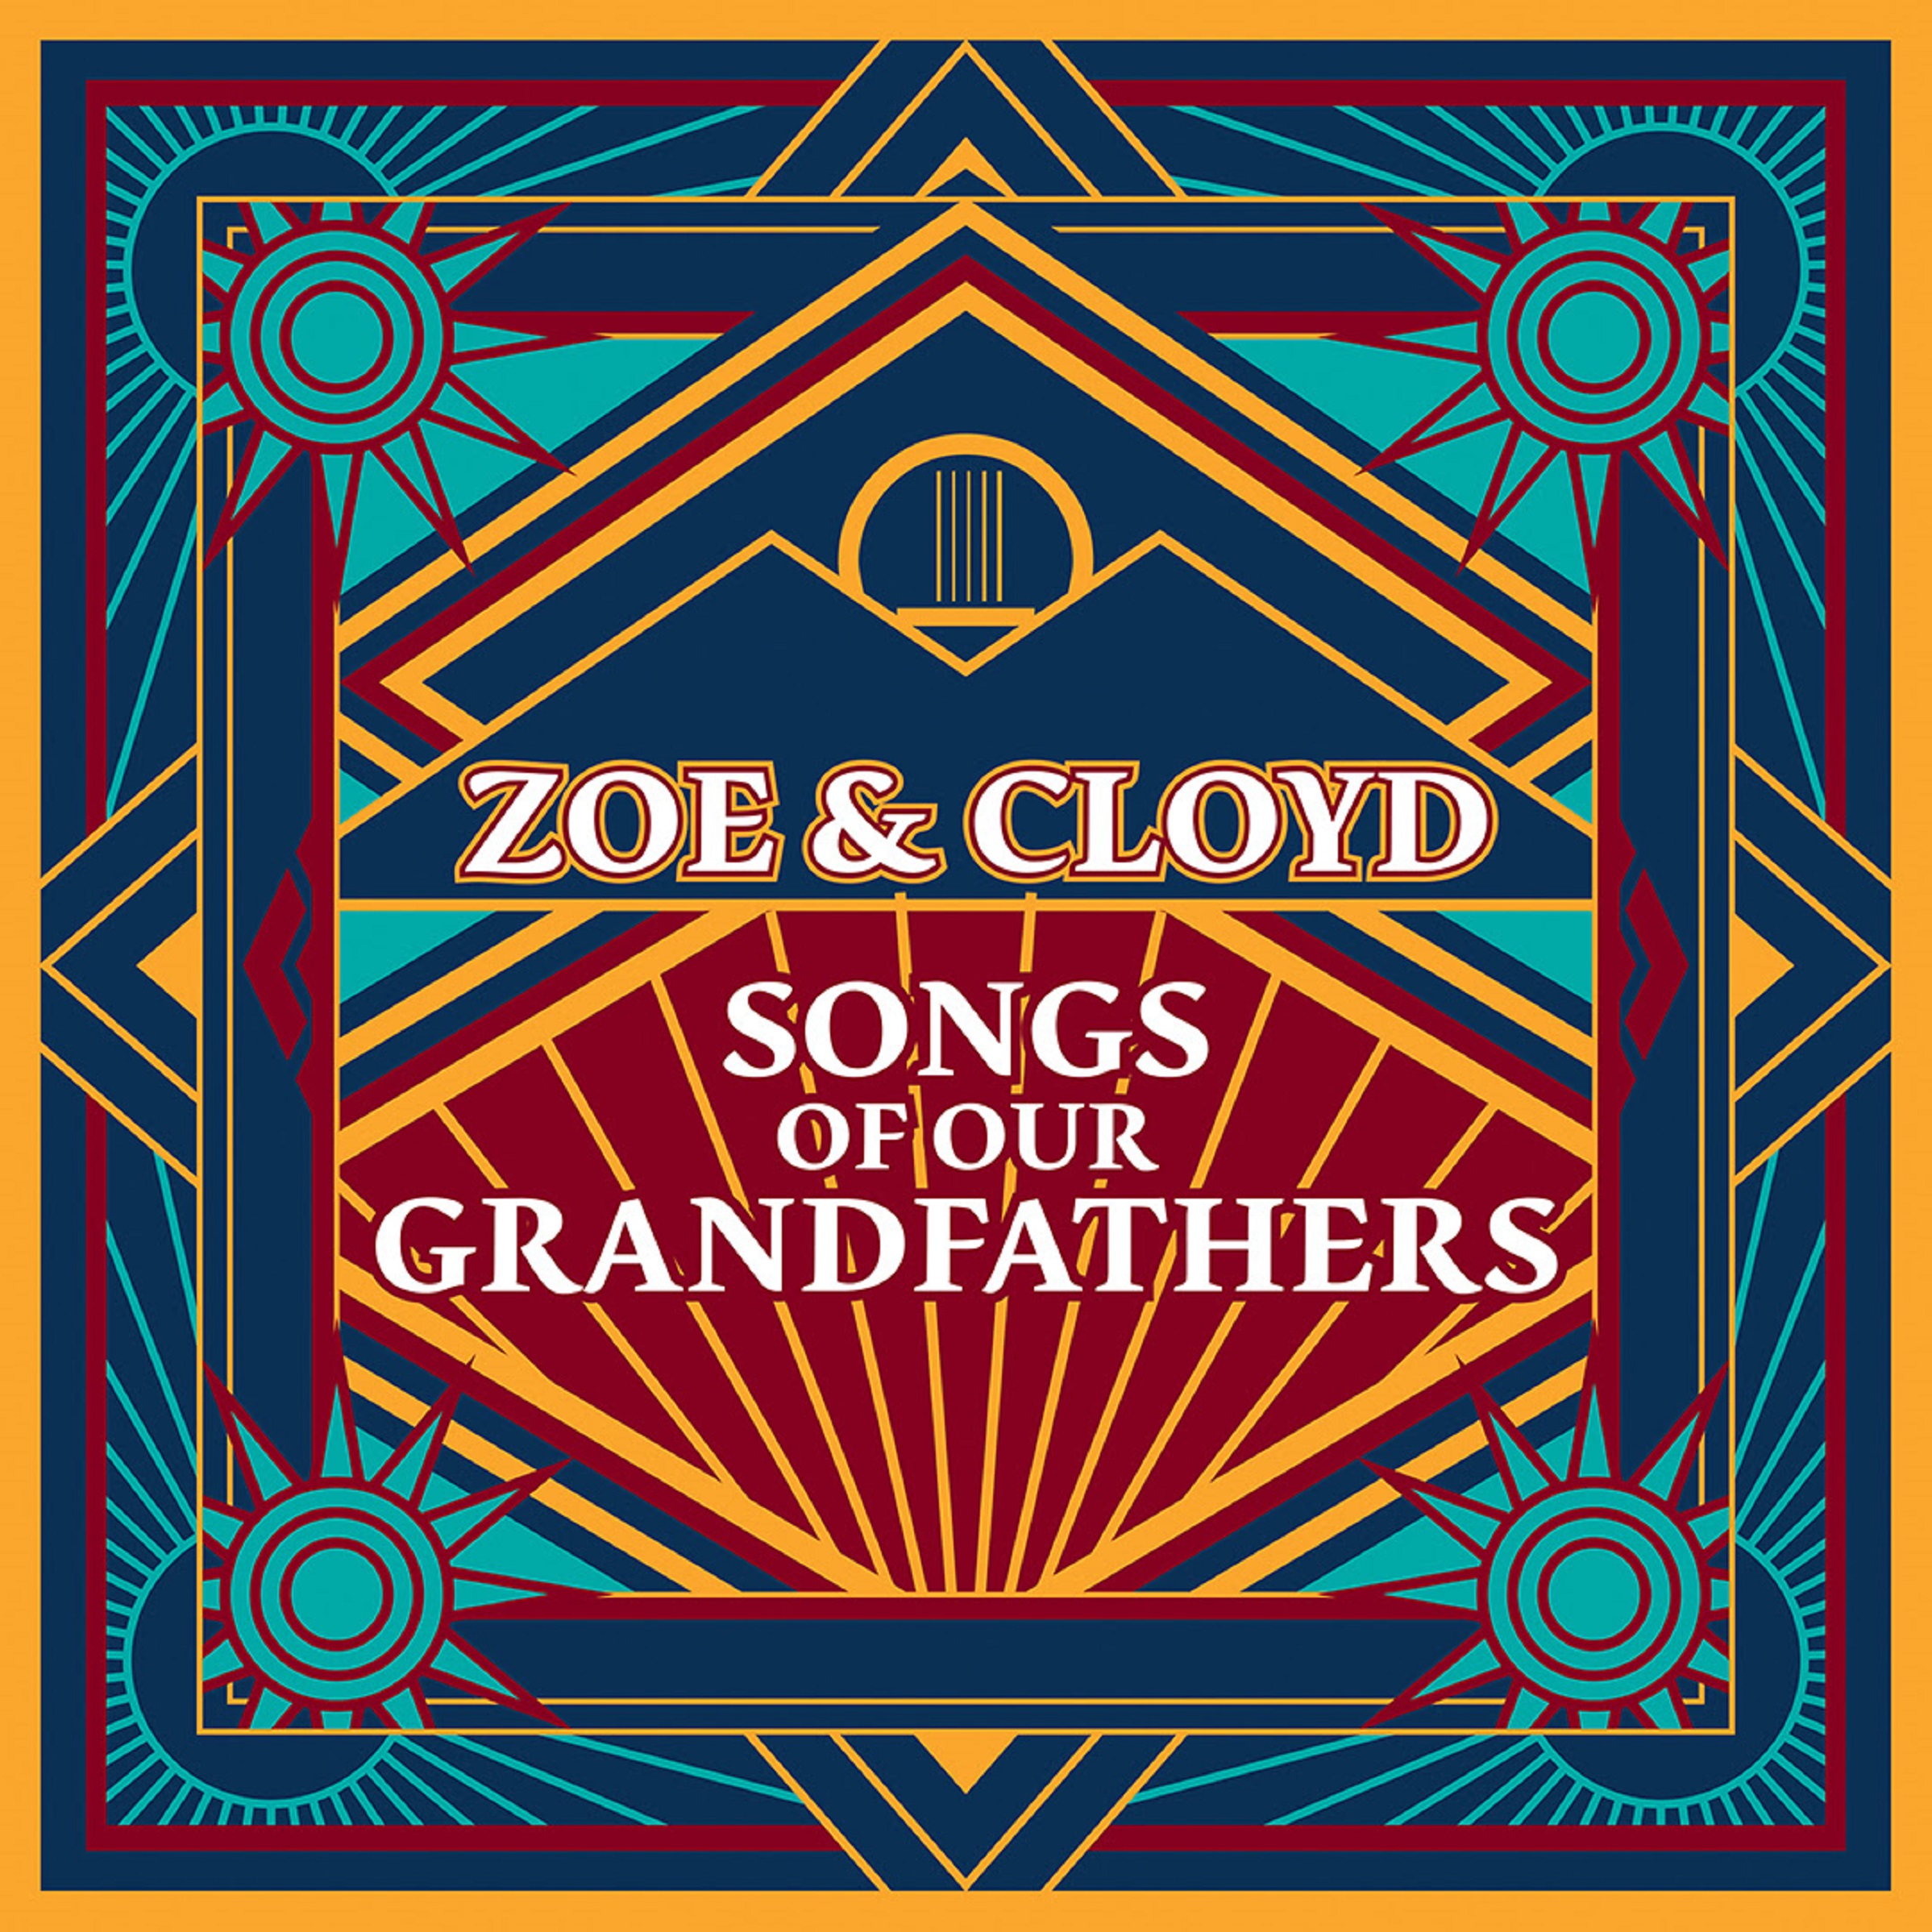 Zoe & Cloyd honor, combine distinctive family musical legacies with upcoming album